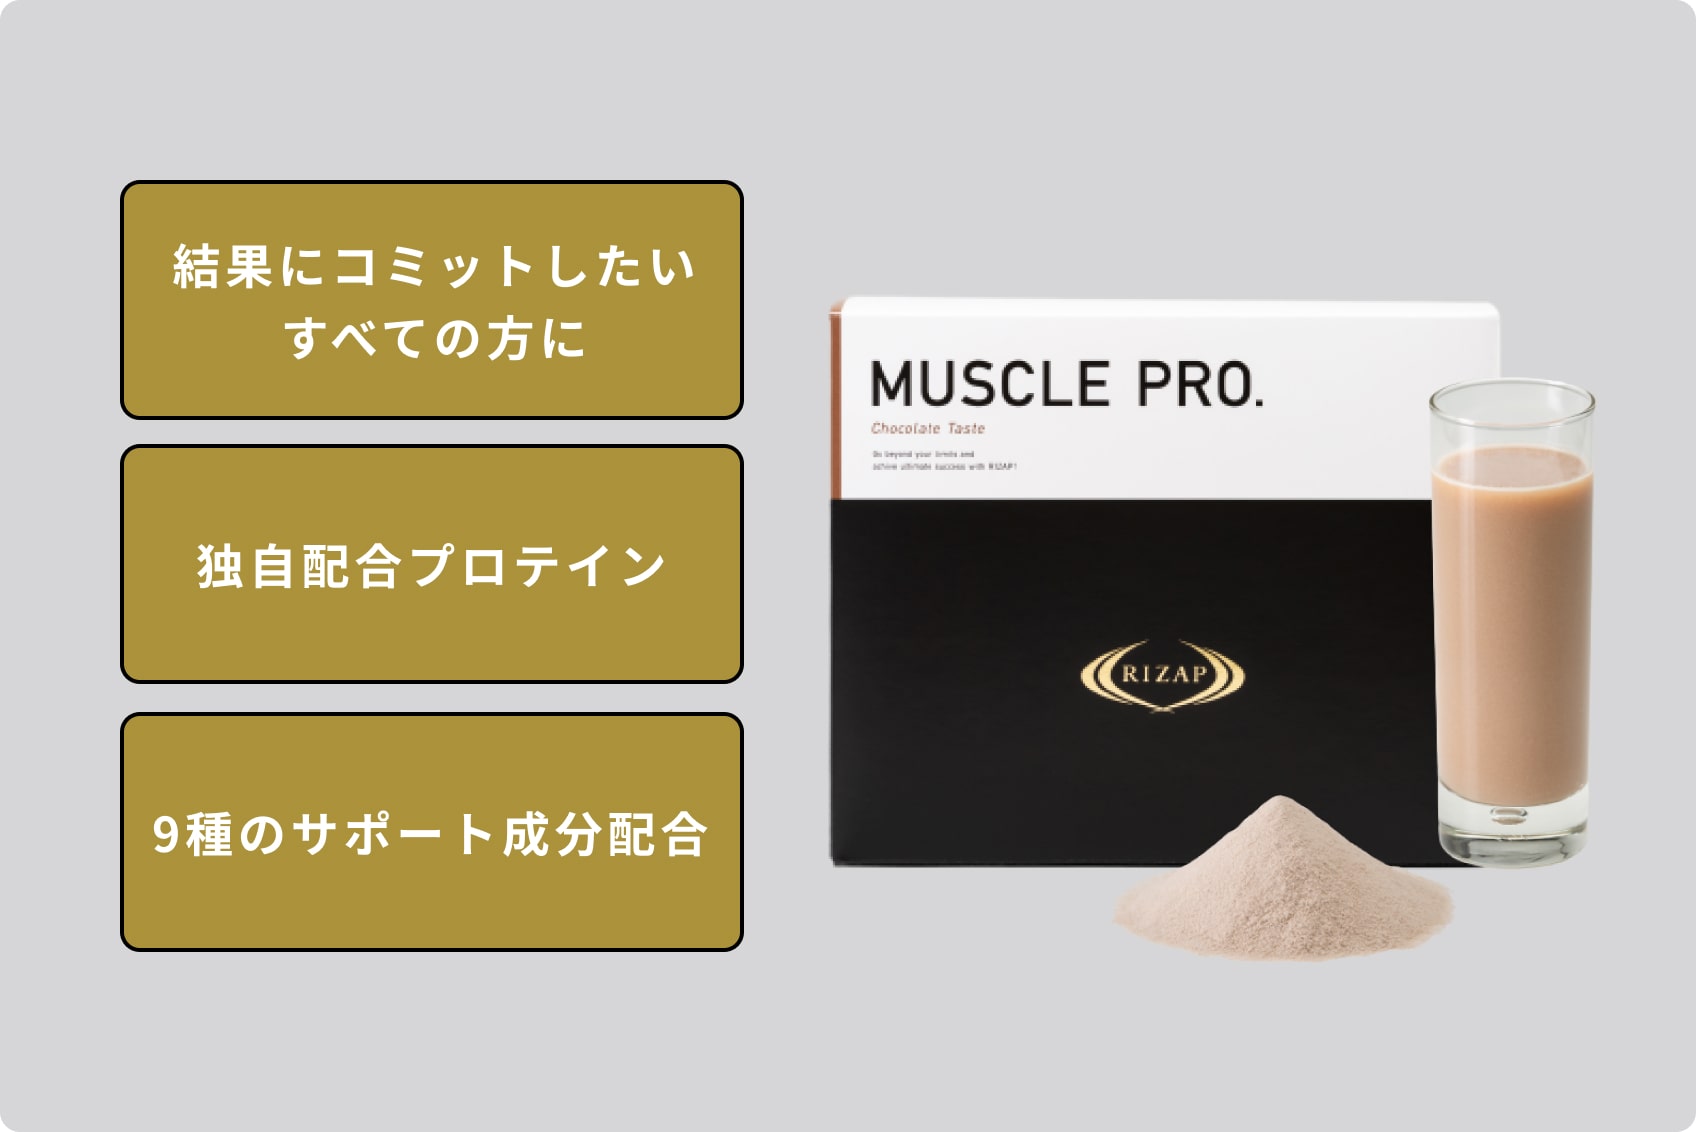 <>MUSCLE PRO.i`R[gj